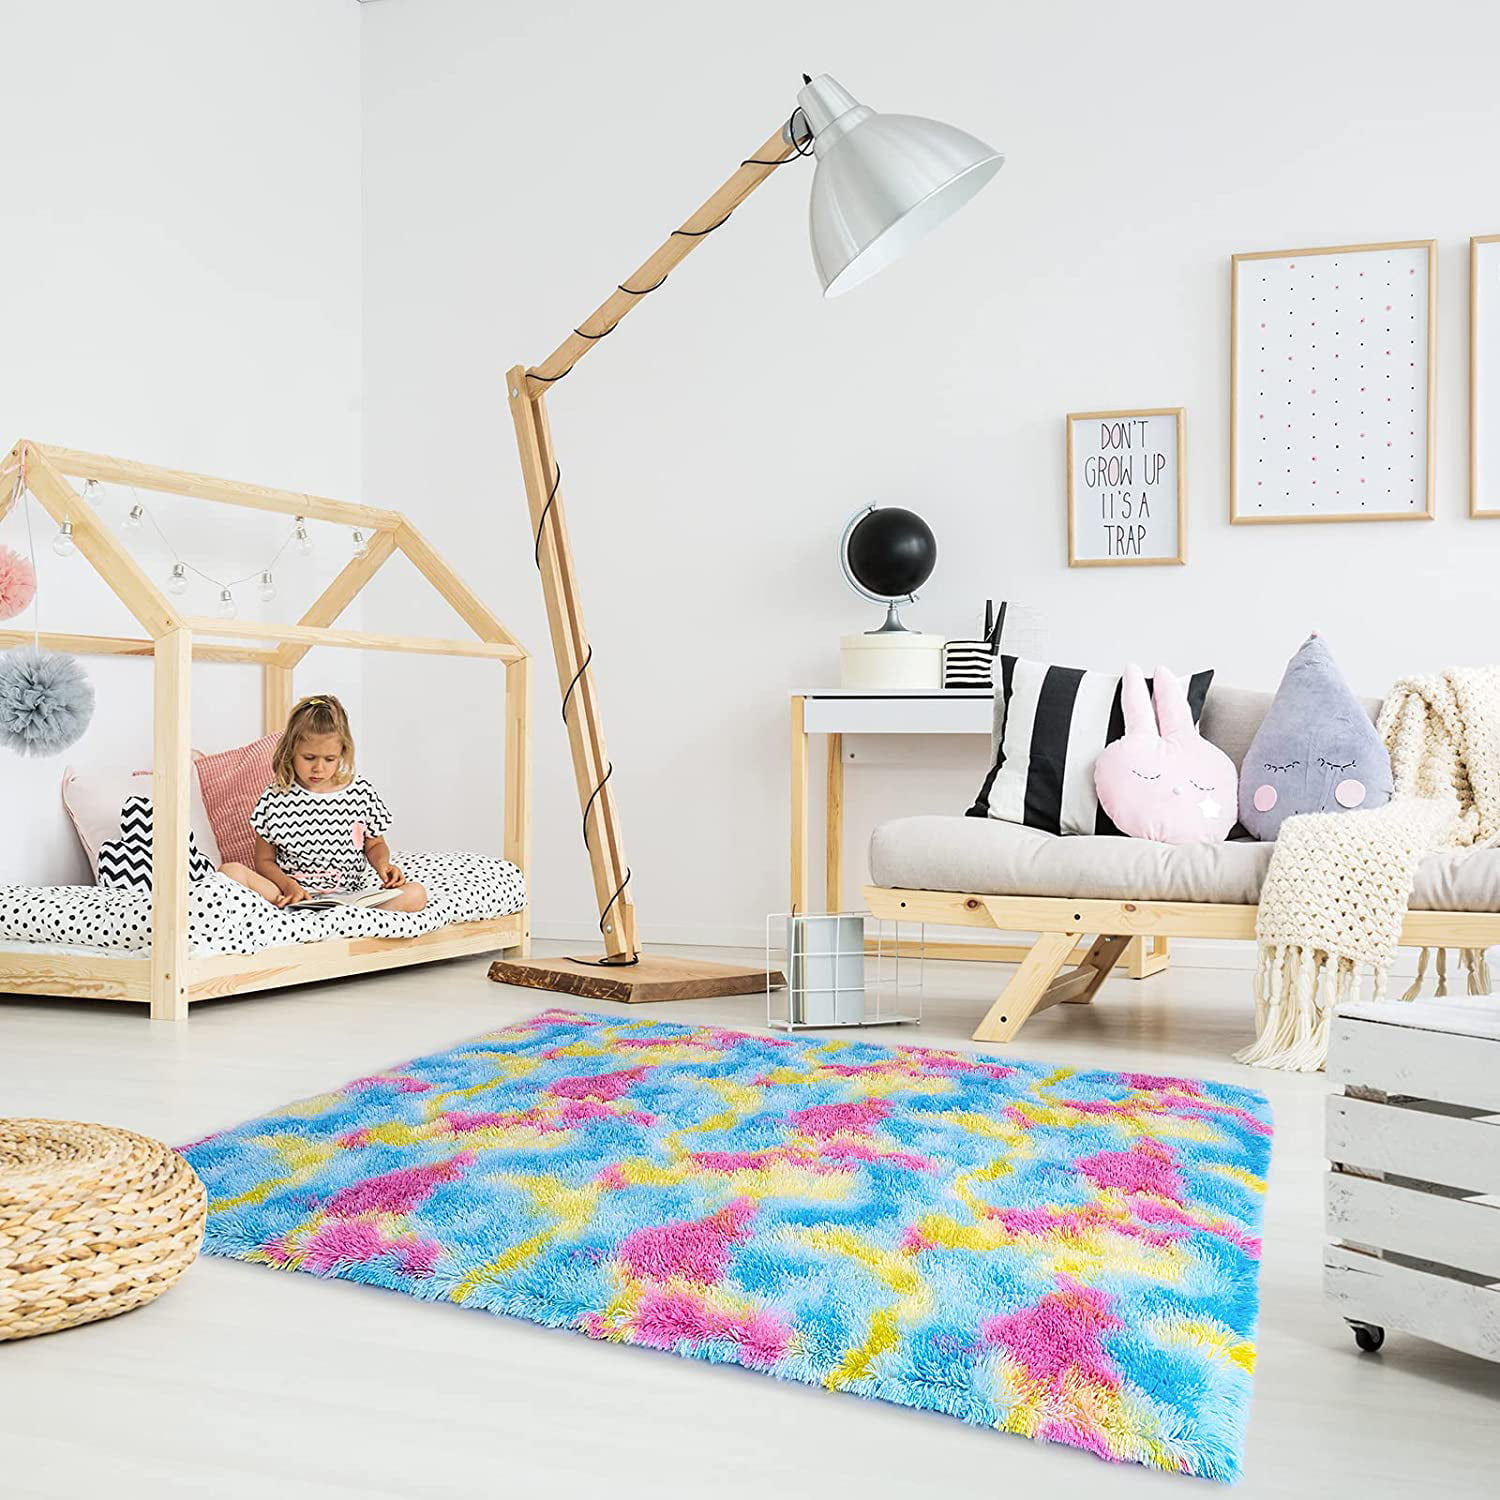 Pou mini emo 😍😍  Kids rugs, Rugs, Decor